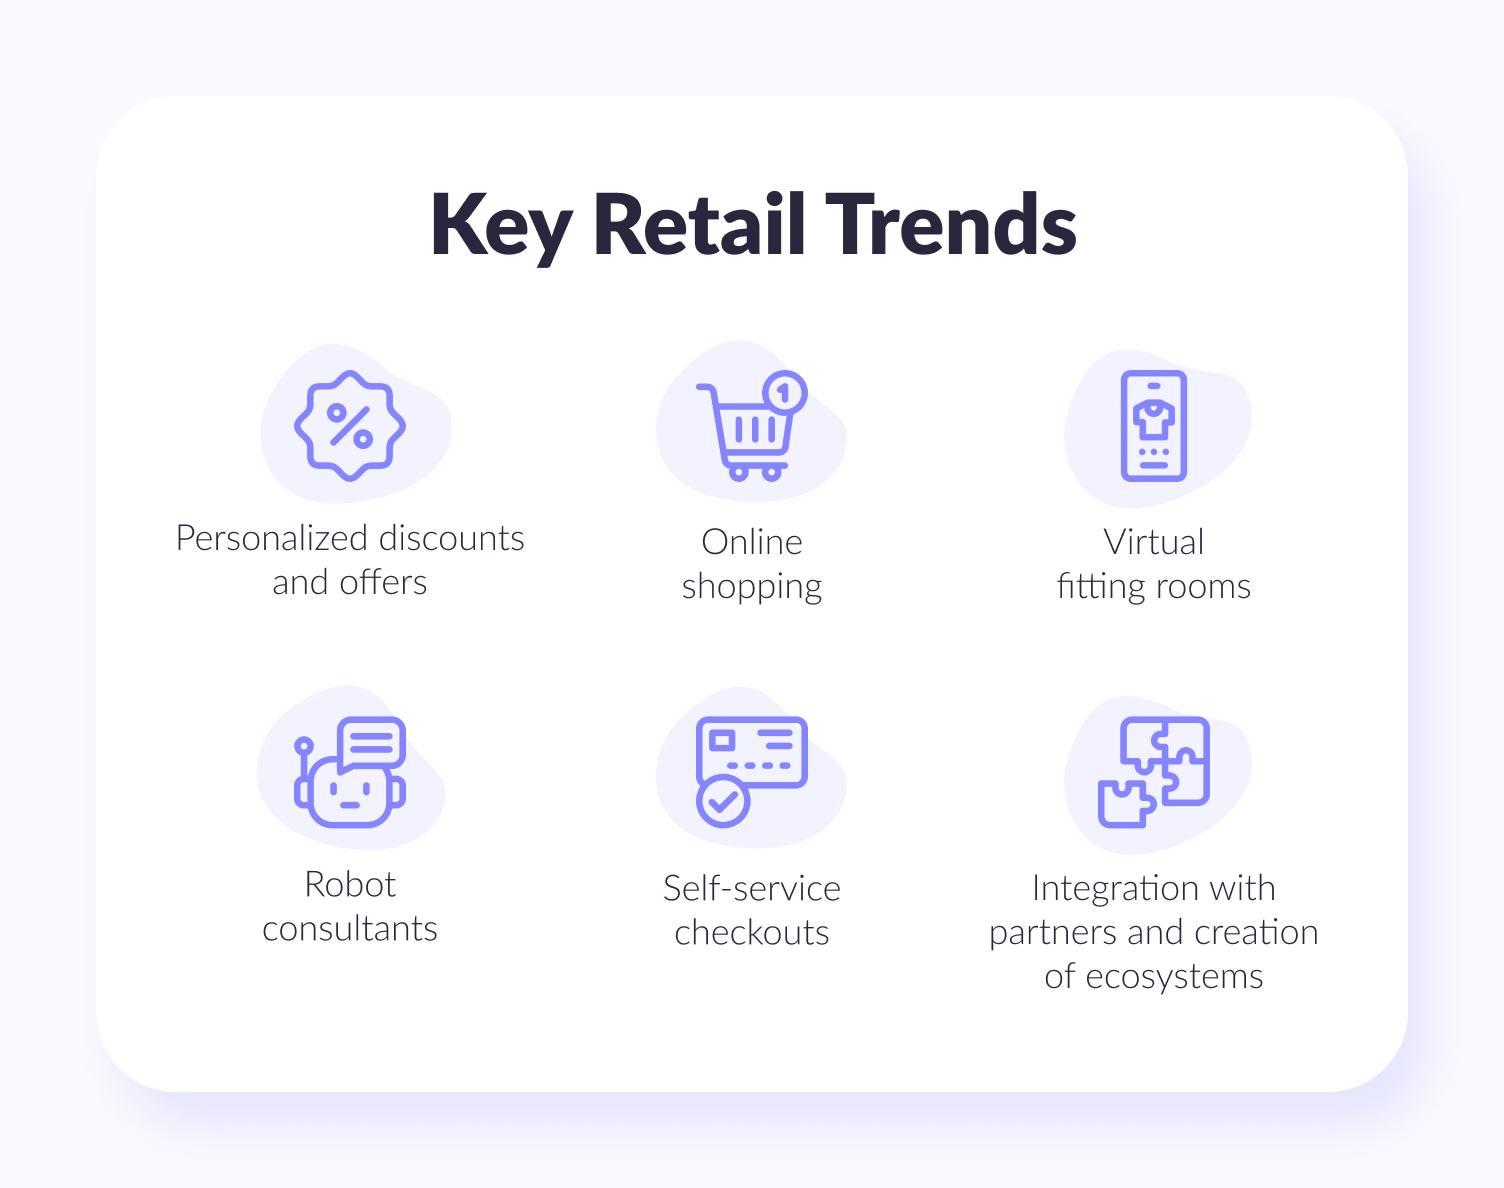 Key retail trends